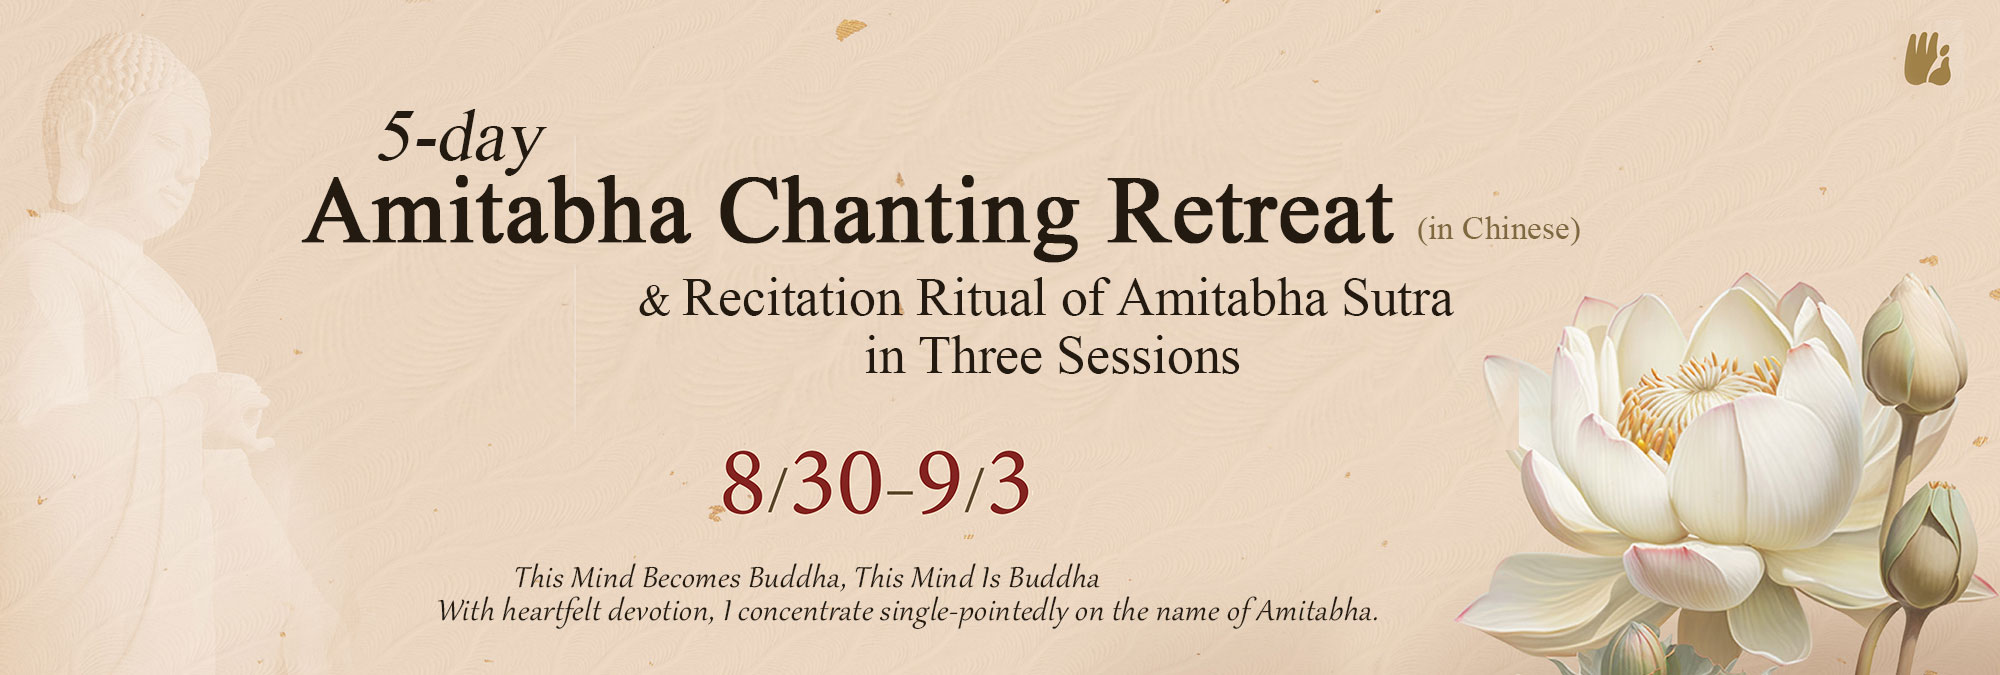 5-DAY AMITABHA CHANTING RETREAT + RECITATION RITUAL OF AMITABHA SUTRA IN THREE SESSIONS